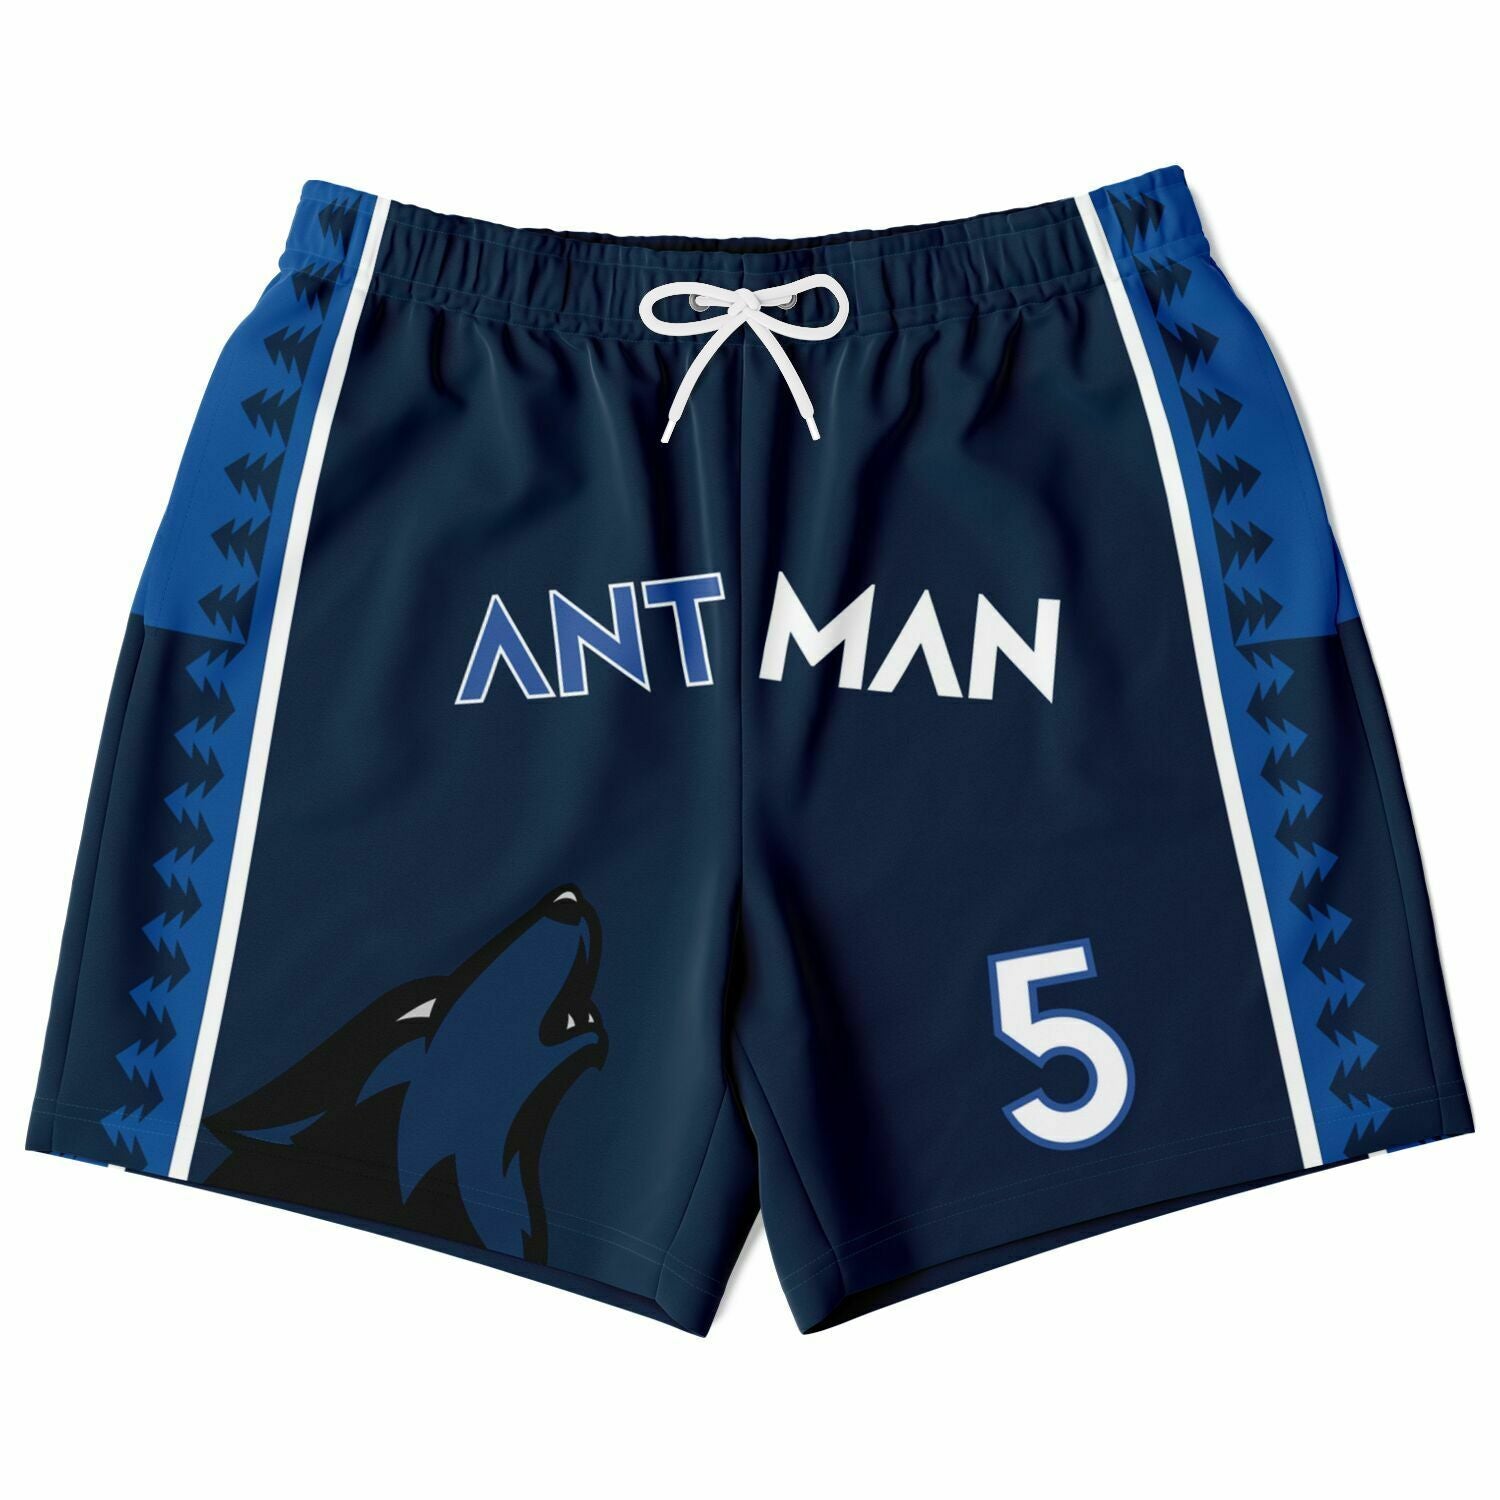 DearBBall Fashion Short - Ant-Man Playoffs Edition